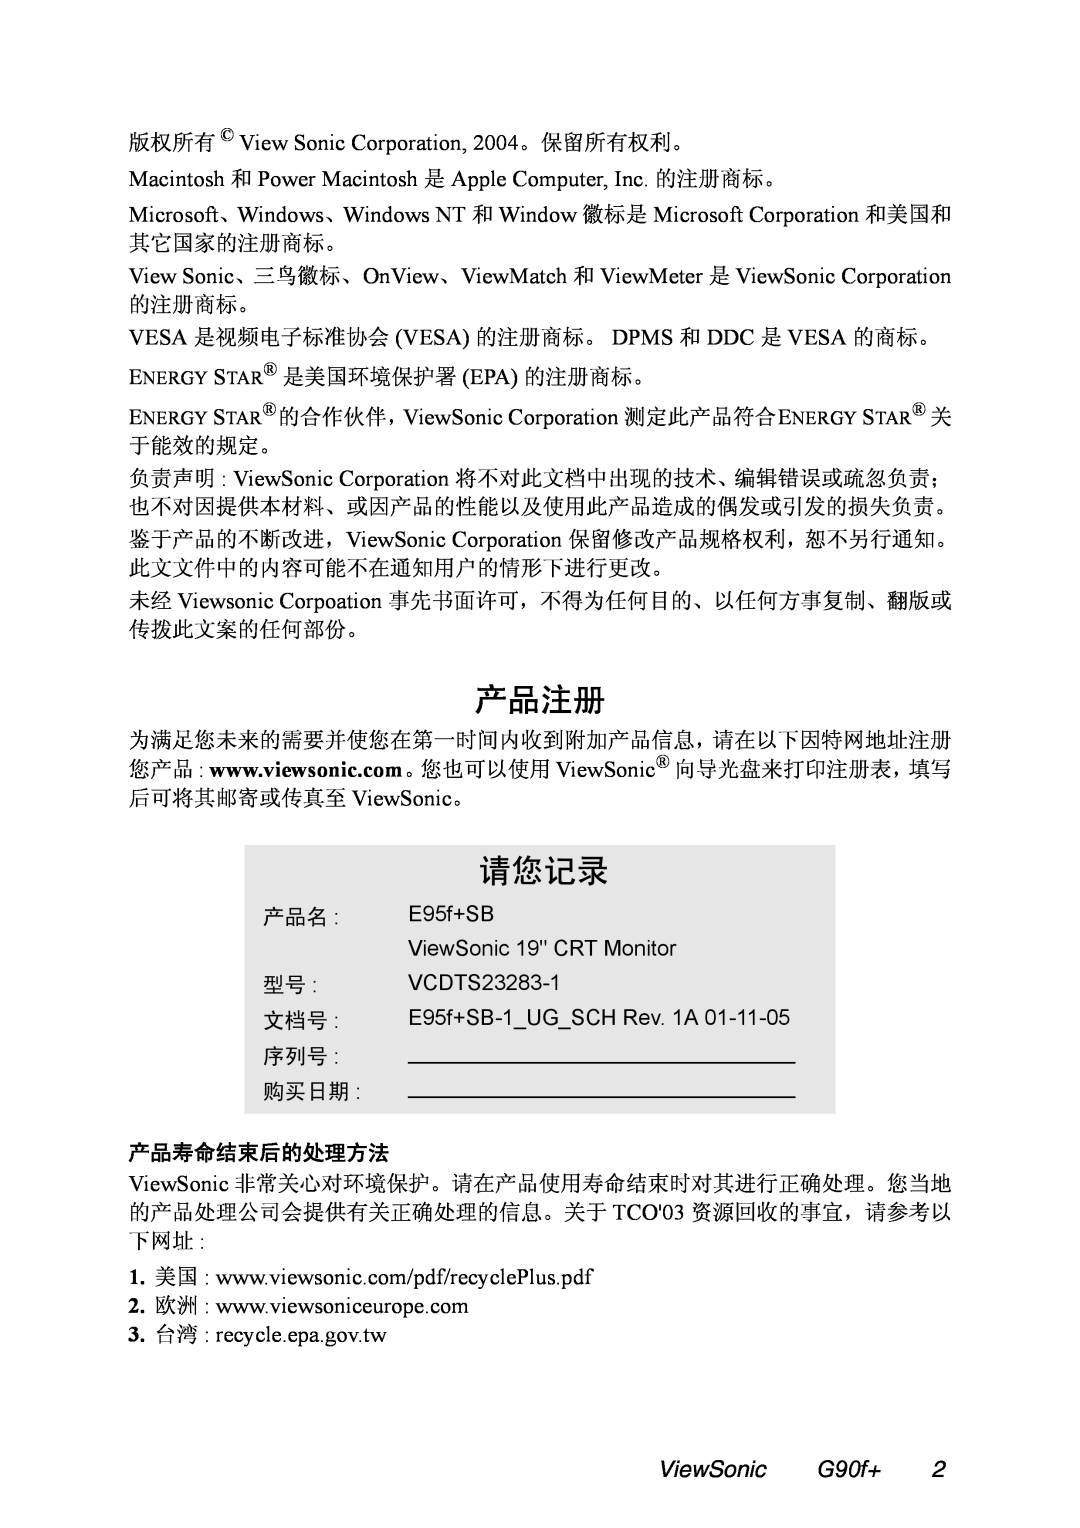 ViewSonic E95f+SB manual 产品注册, 请您记录, 3. 台湾 recycle.epa.gov.tw, ViewSonic G90f+, 产品寿命结束后的处理方法 